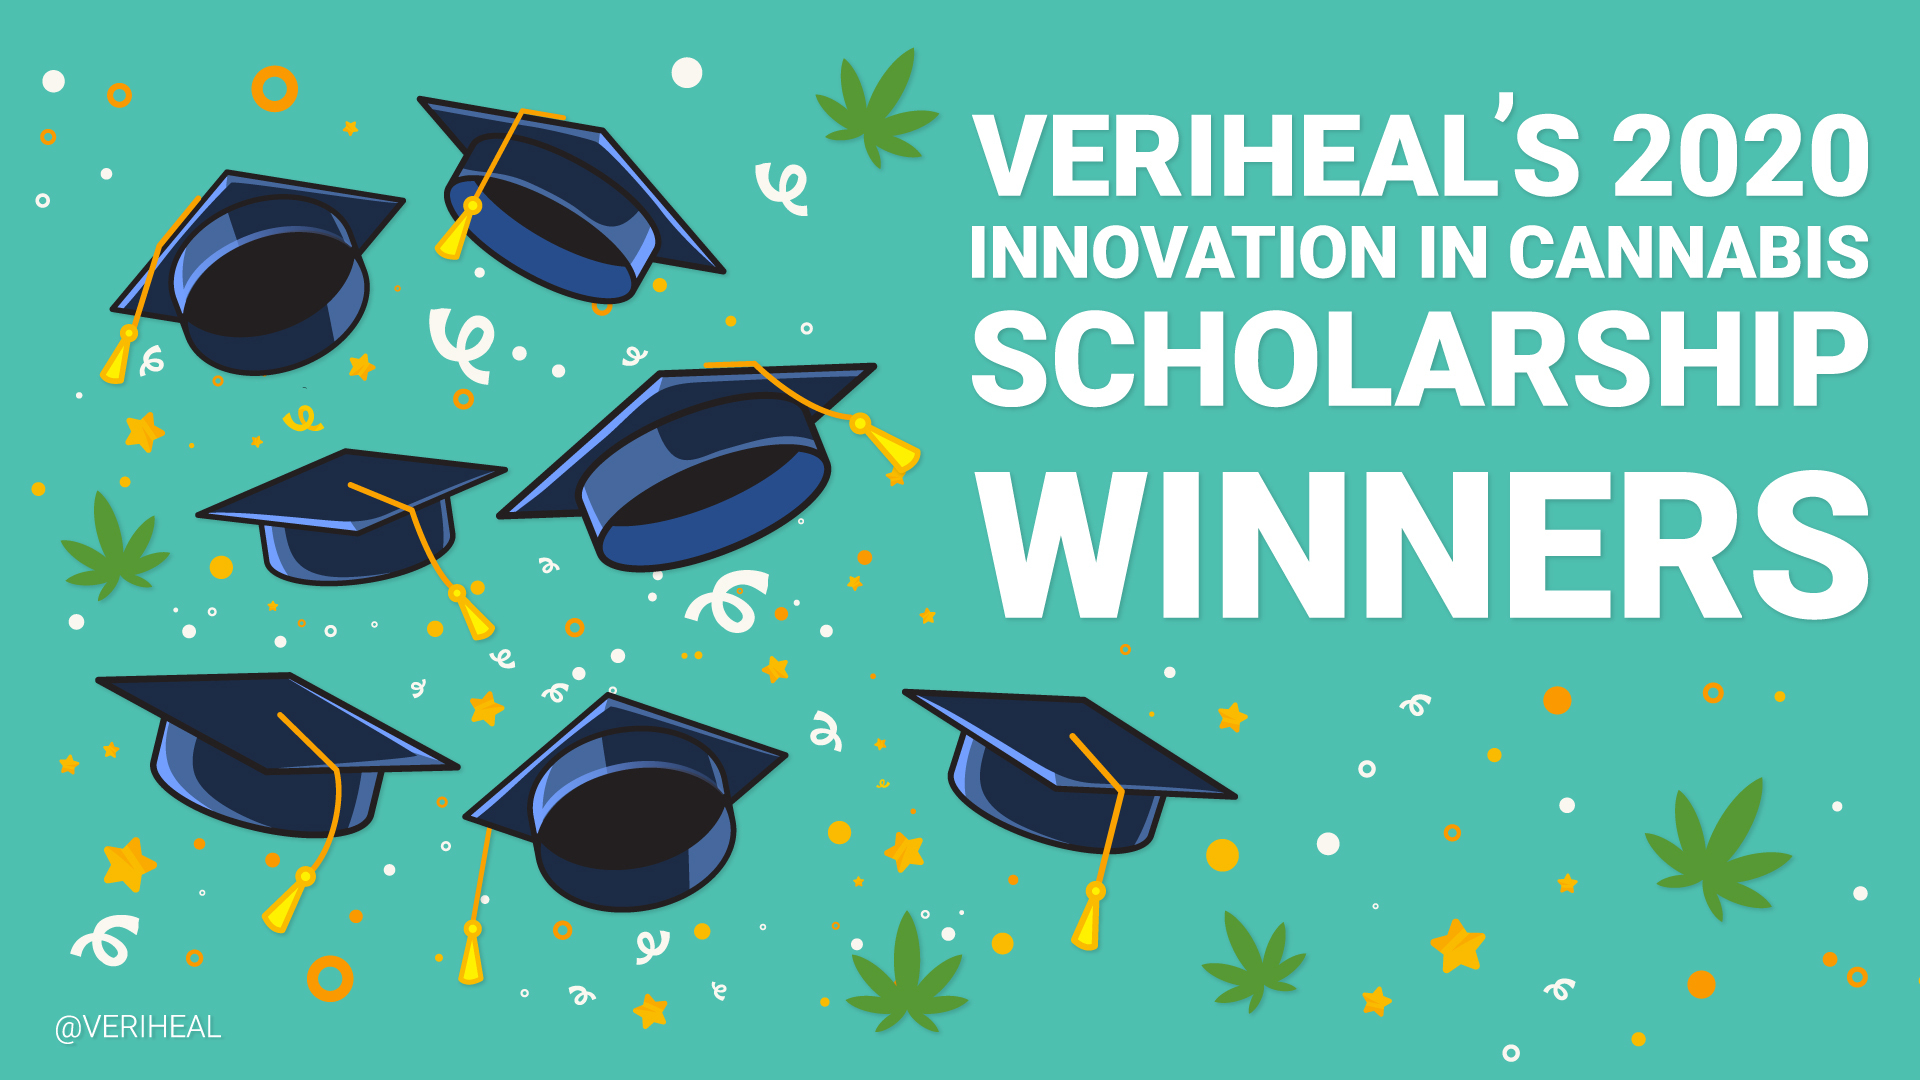 Veriheal’s 2020 Innovation in Cannabis Scholarship Winners